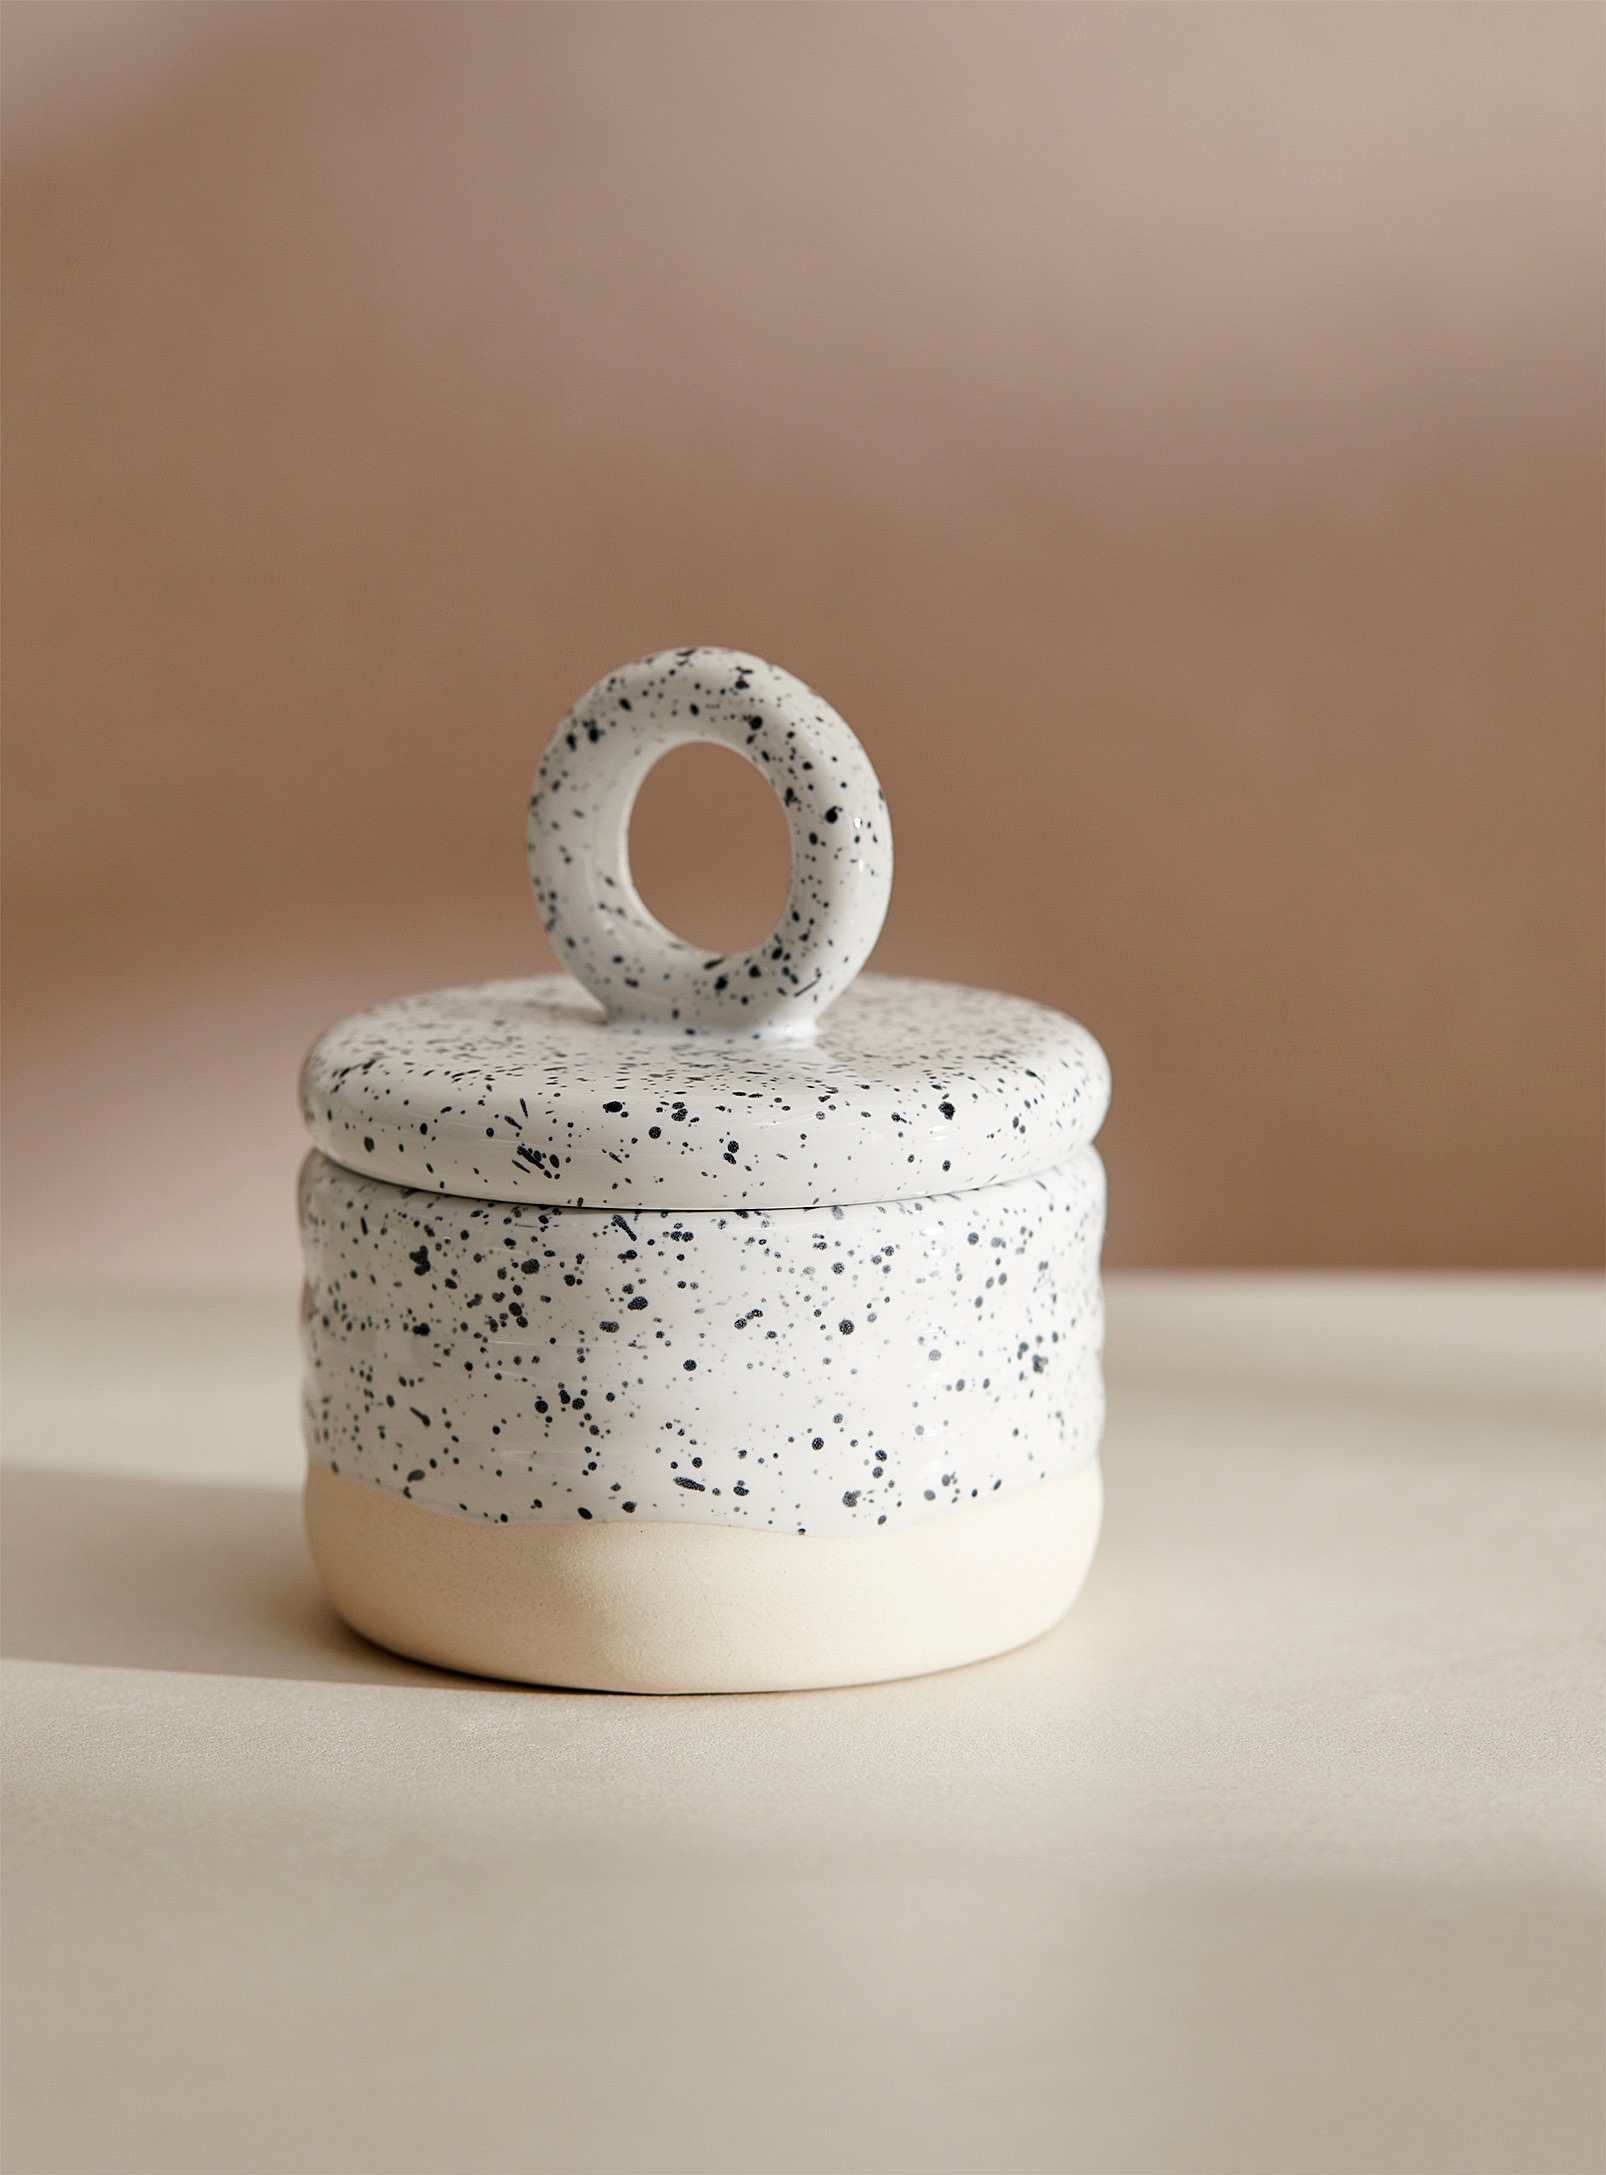 Simons Maison - Speckled ceramic decorative jar